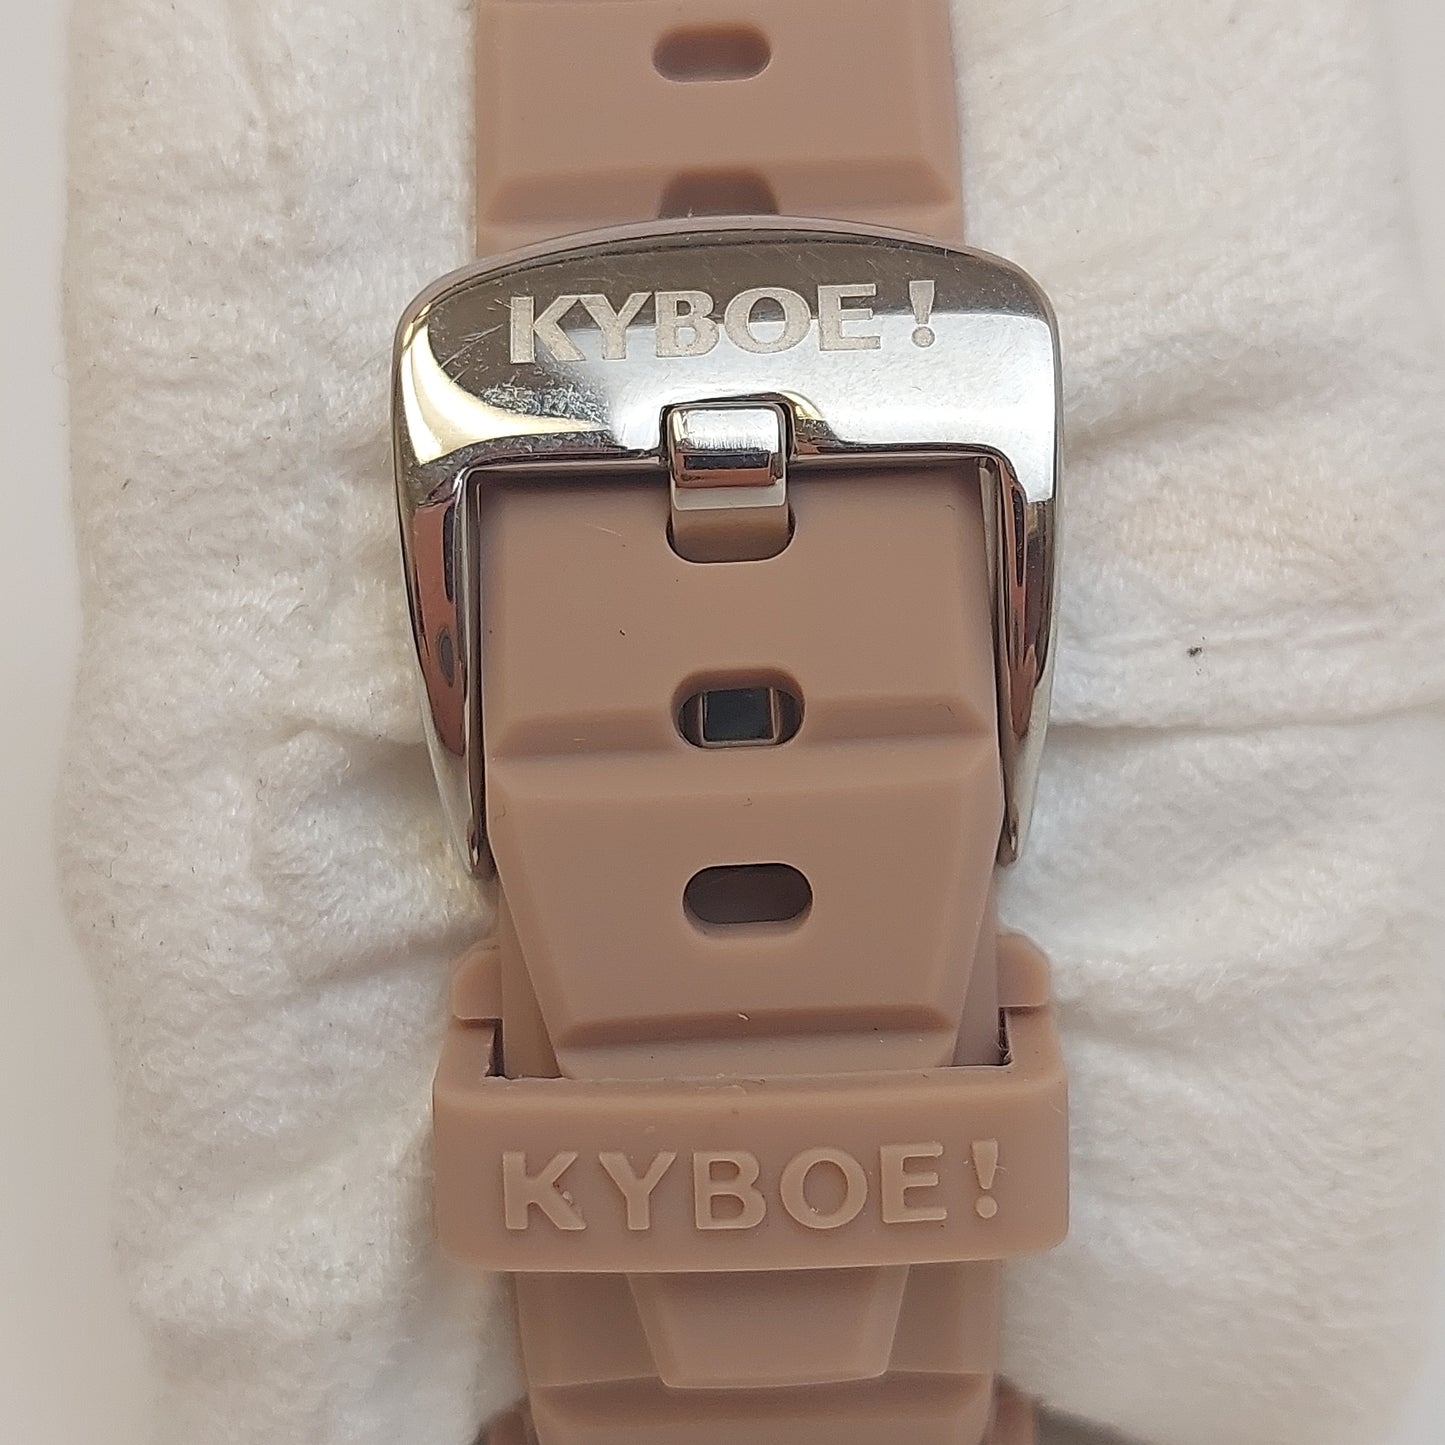 KYBOE! Original Giant 40 mm 100m Women Watch w/ Silicone Strap NEED NEW Retail 190.00